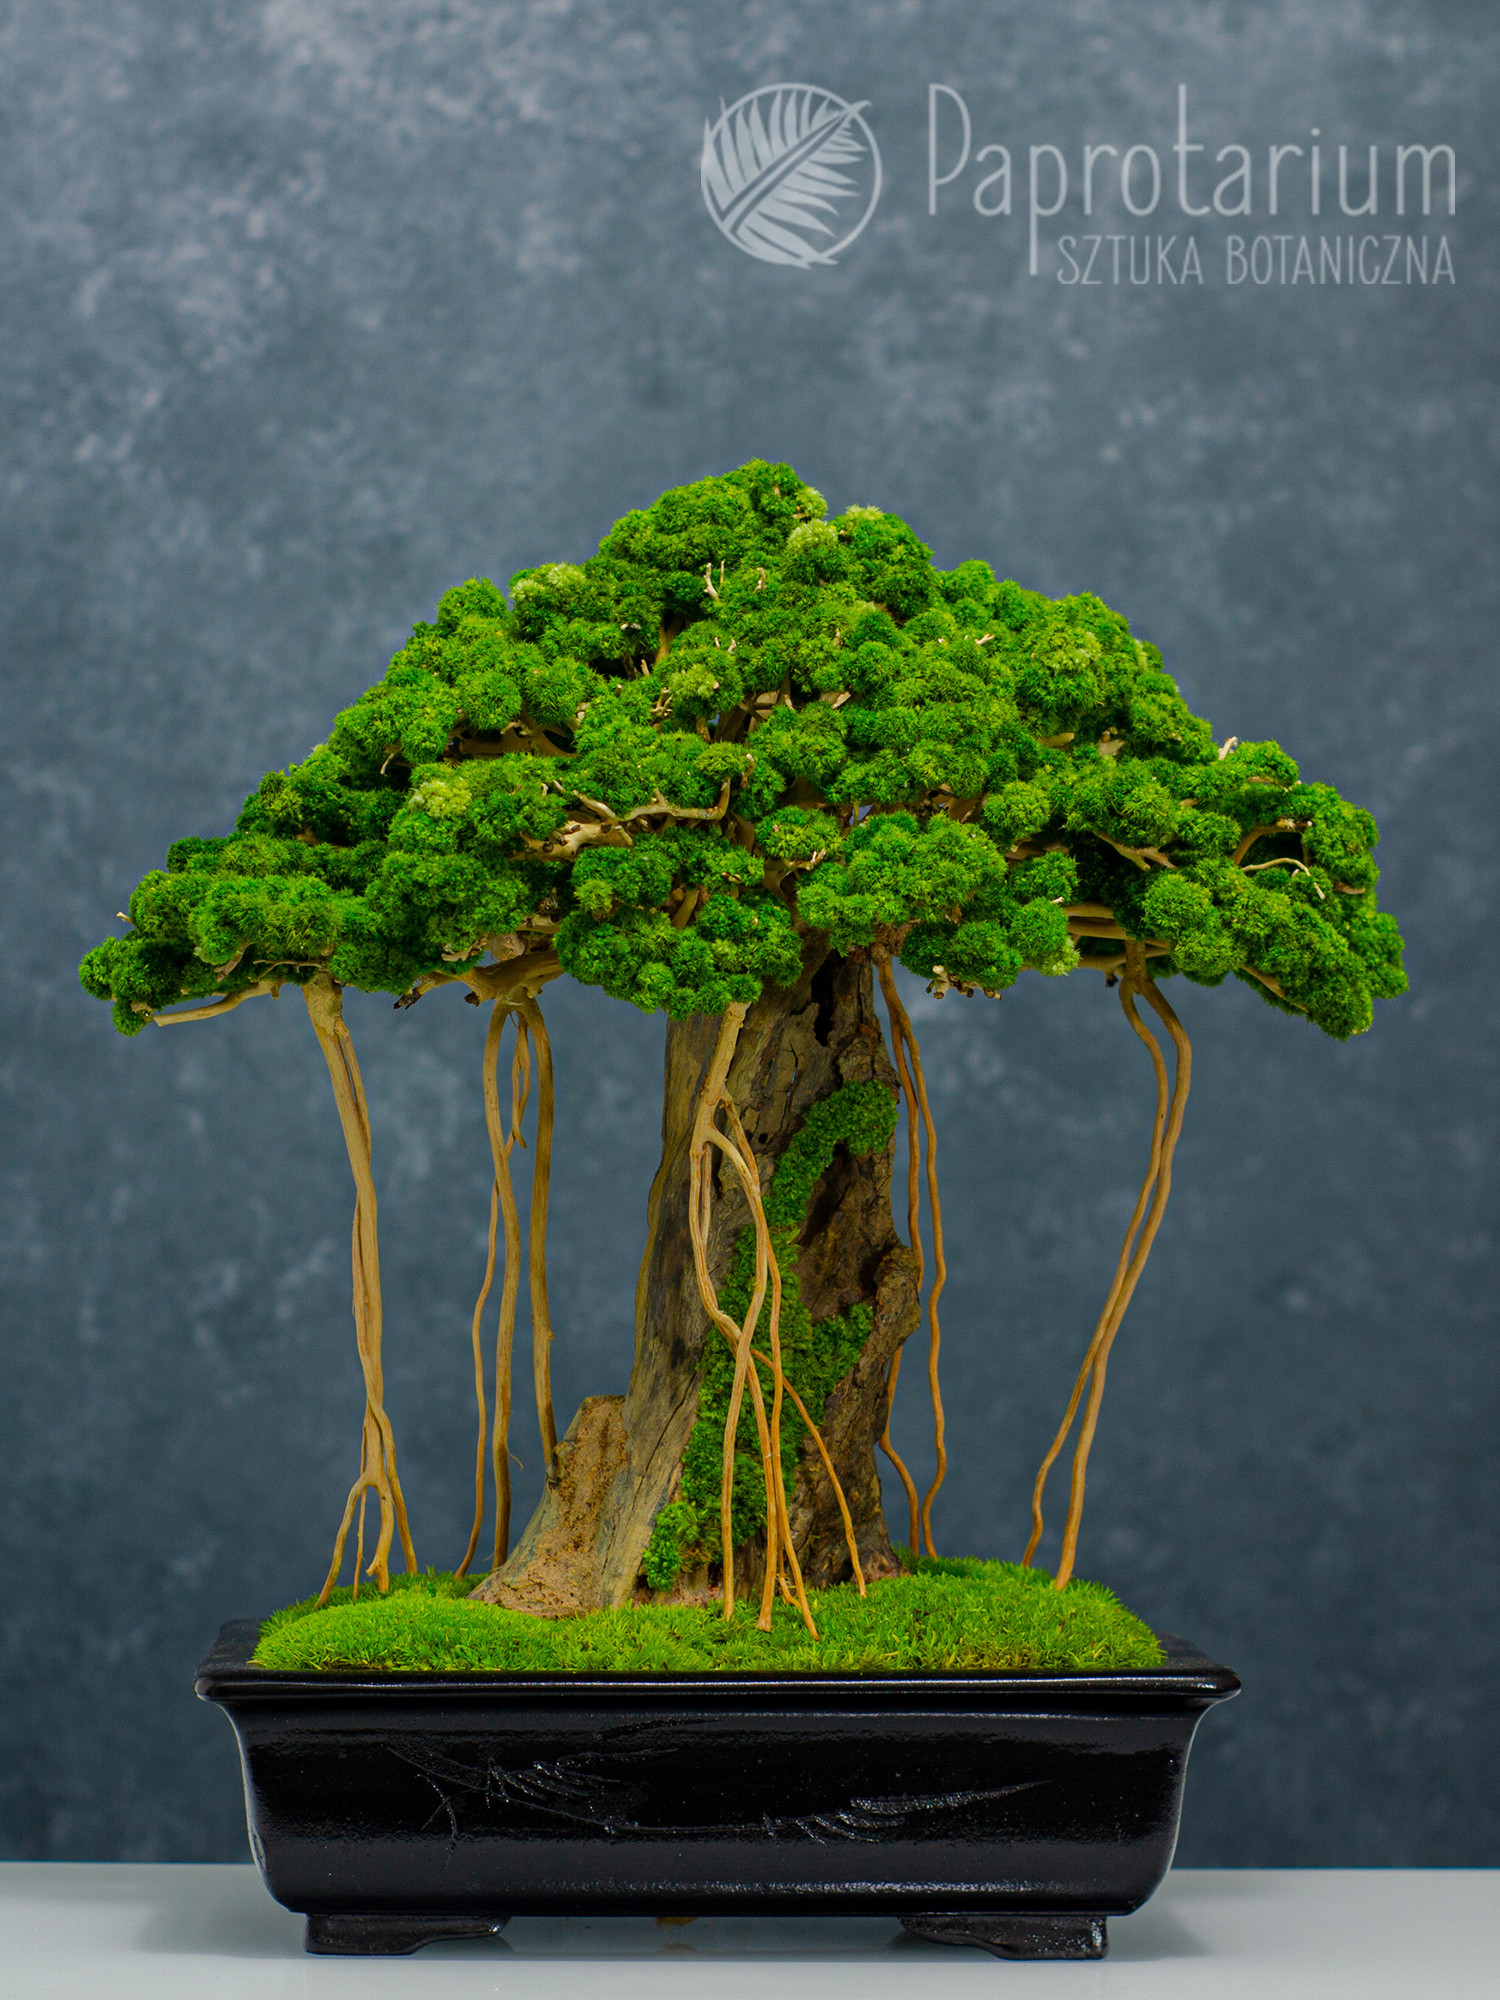 Artificial bonsai tree with lianas